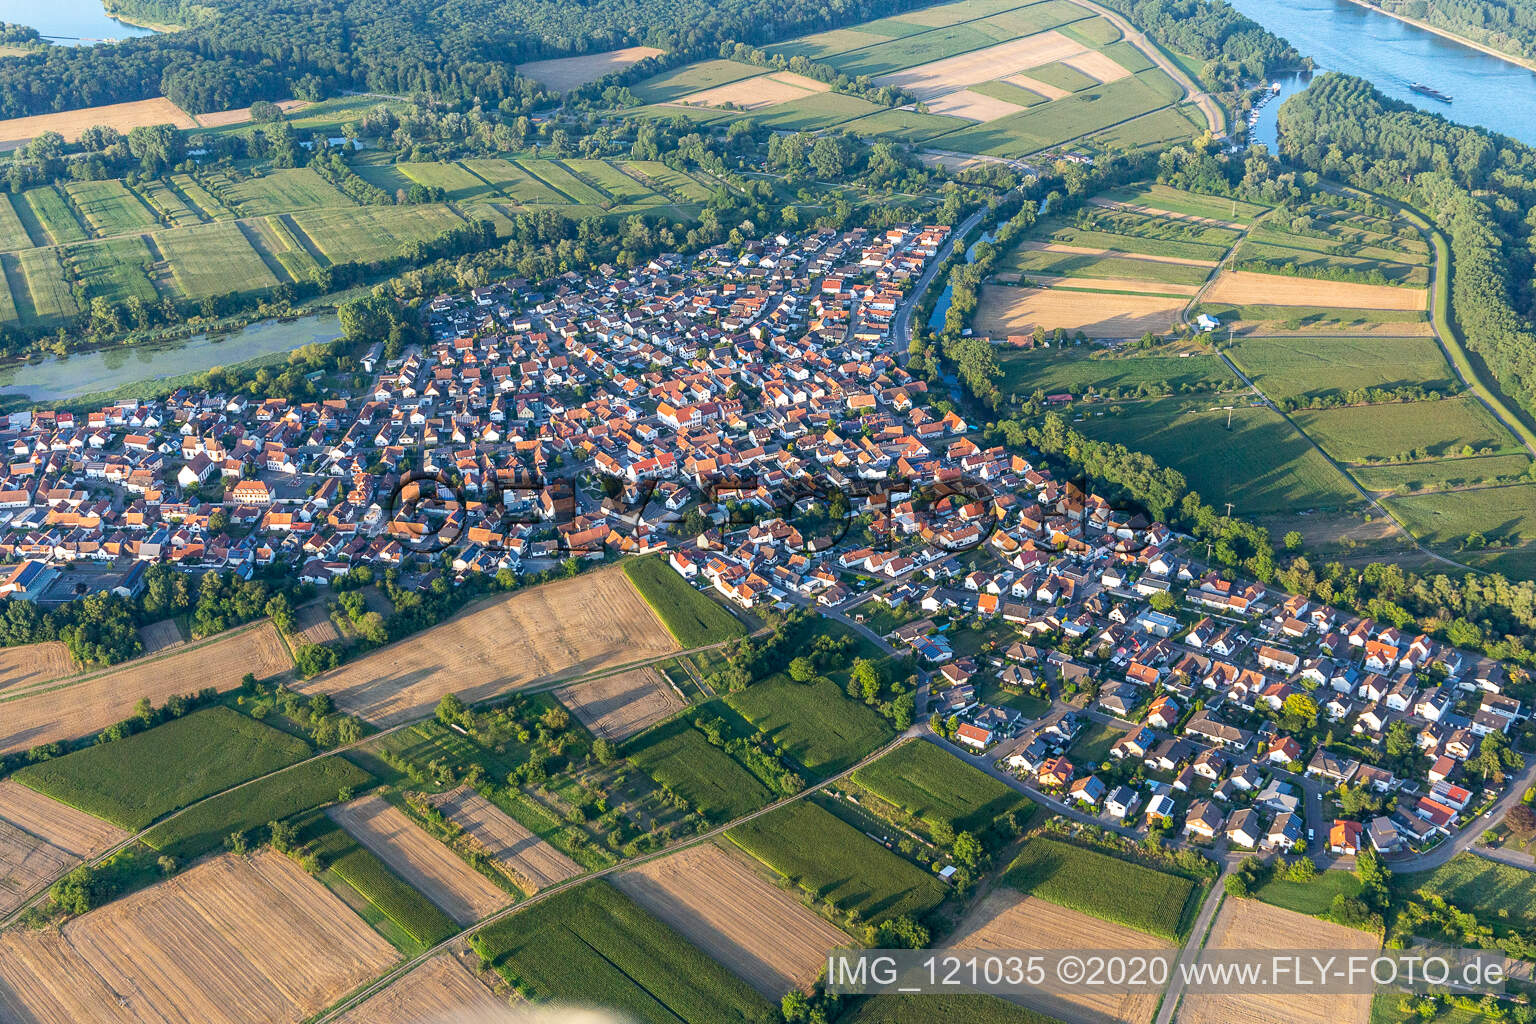 Aerial view of Neuburg am Rhein in the state Rhineland-Palatinate, Germany